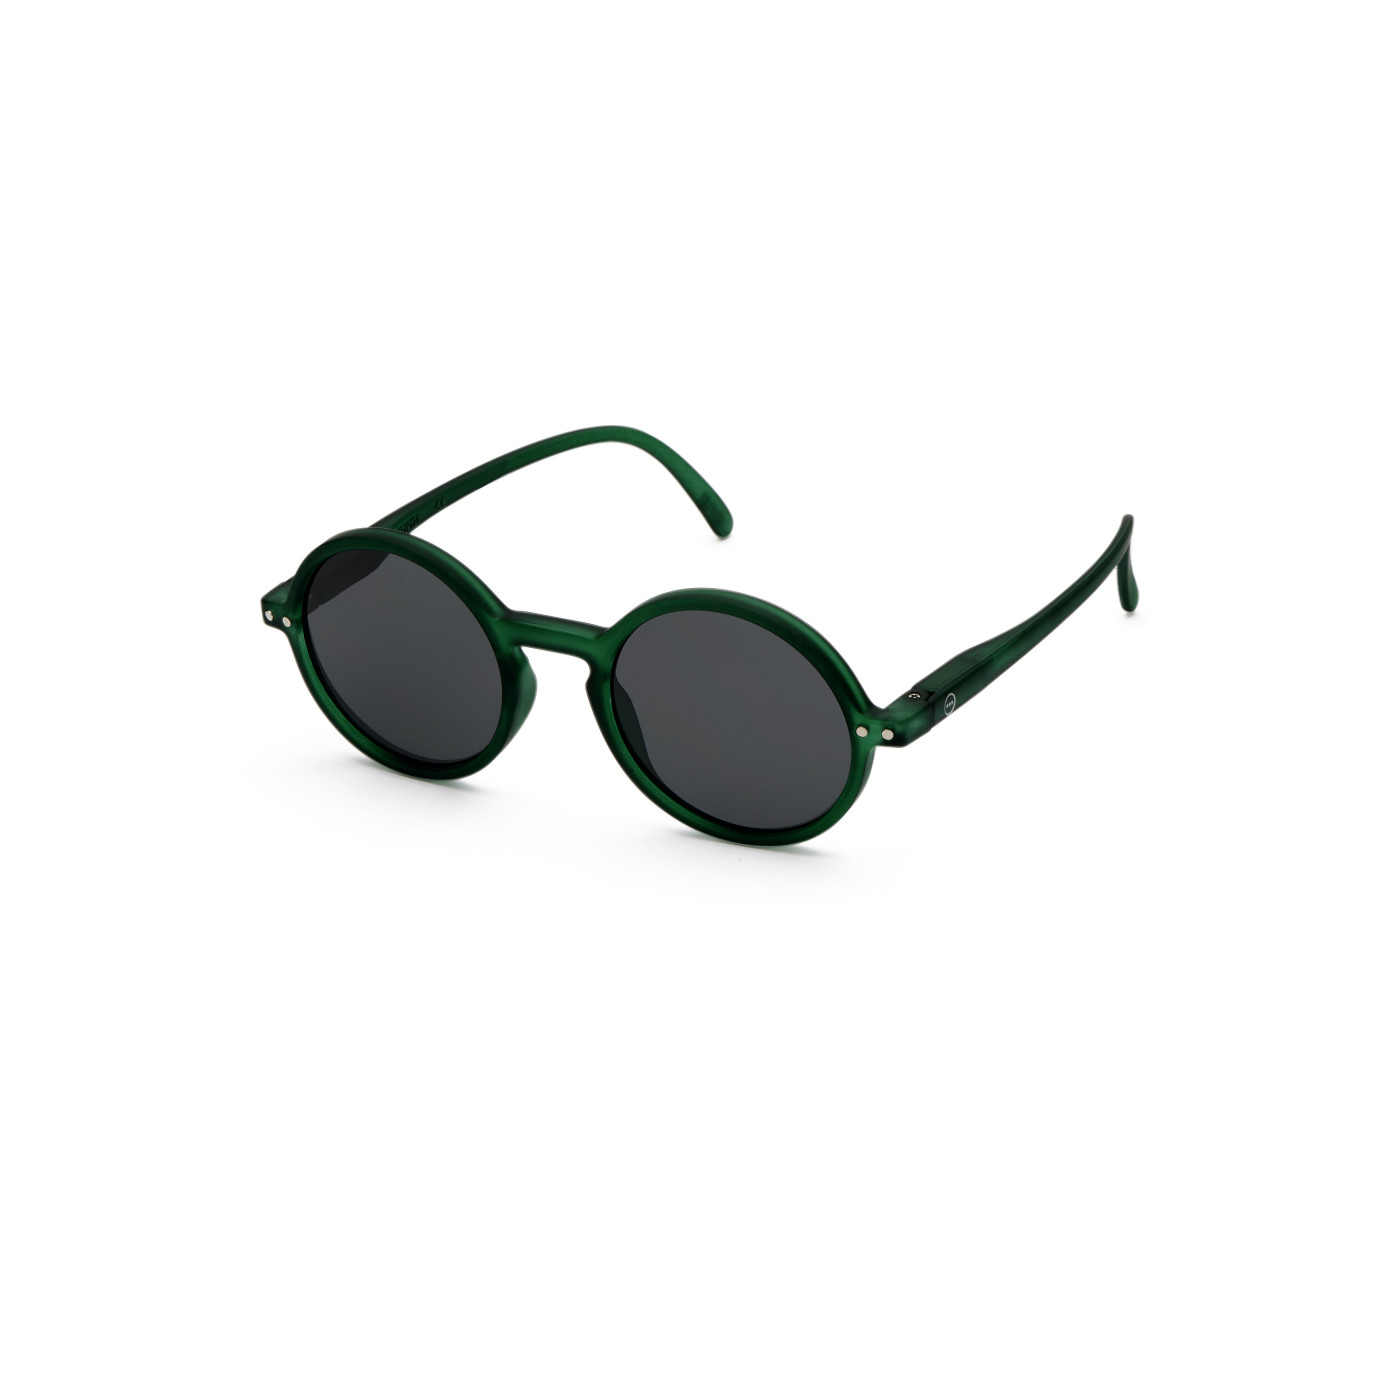 g-sun-junior-green-lunettes-soleil-enfant